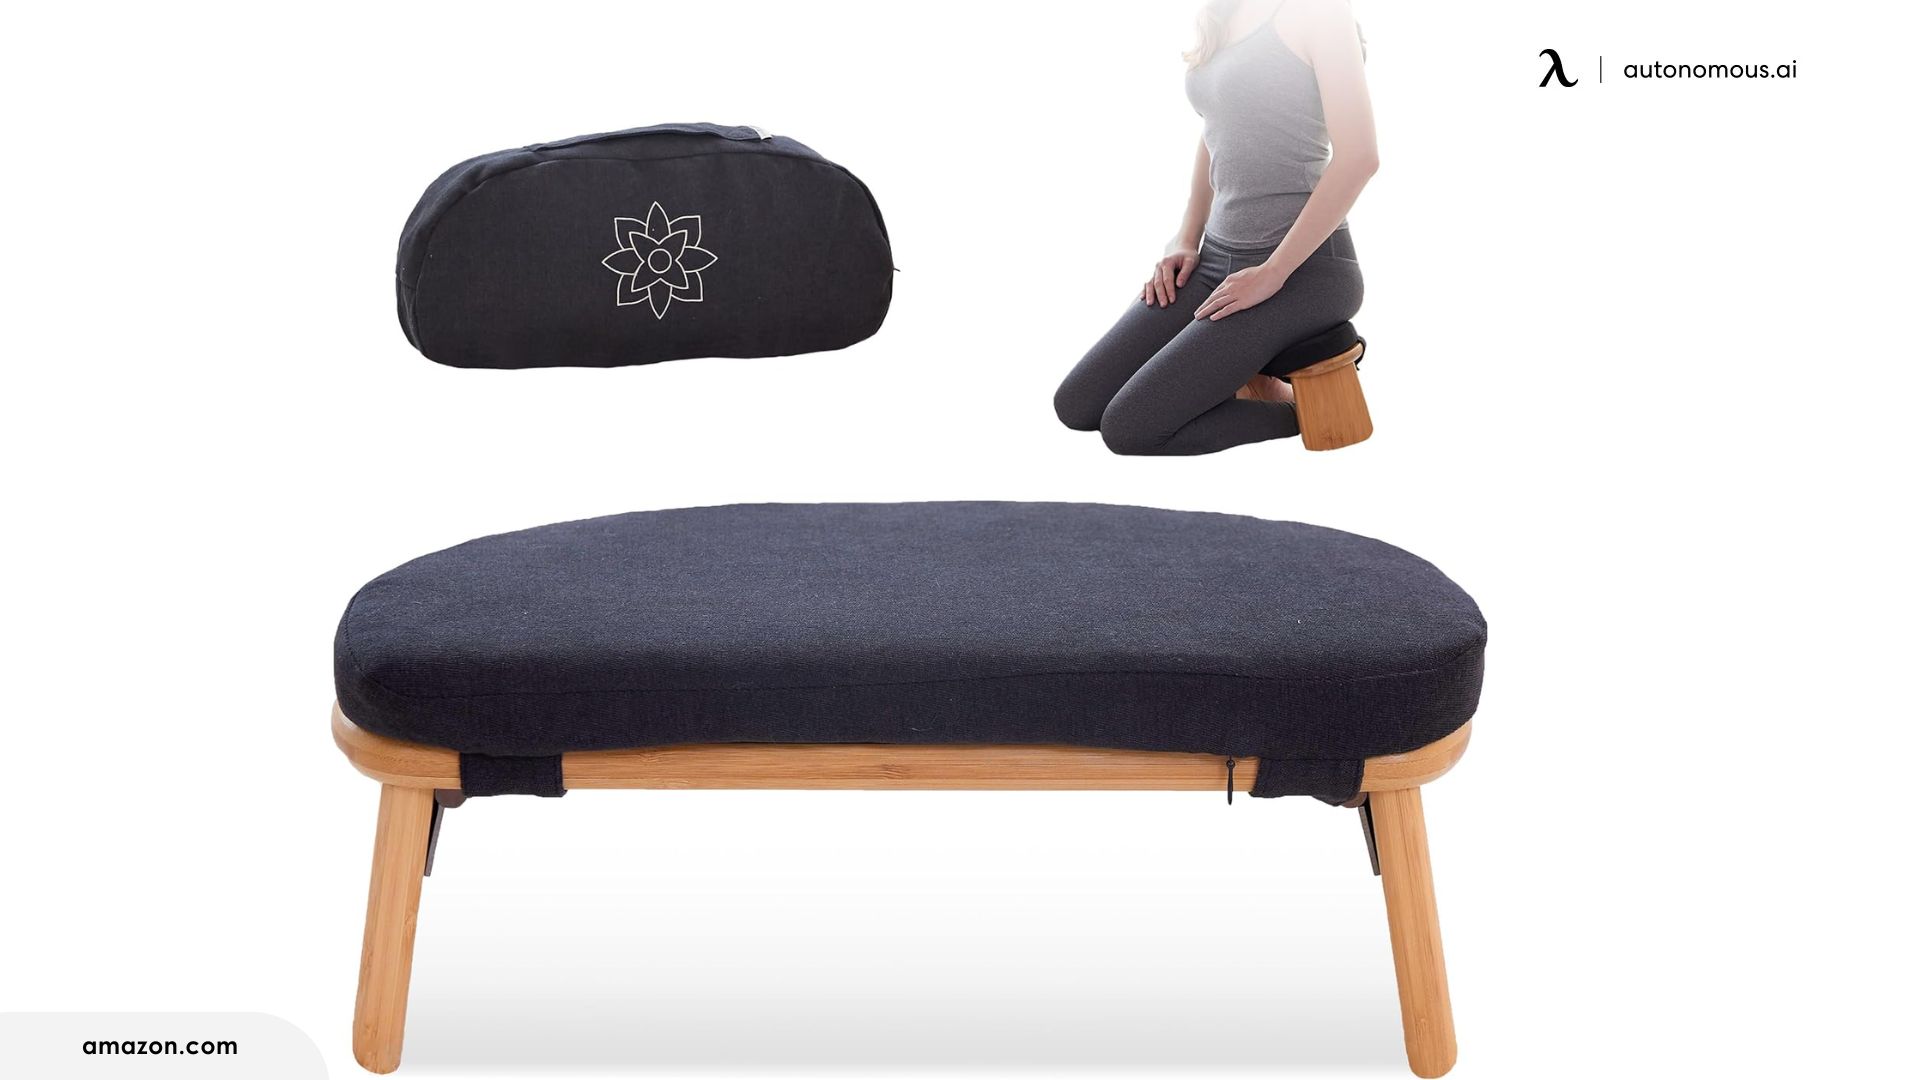 Mindful Modern Folding Meditation Bench